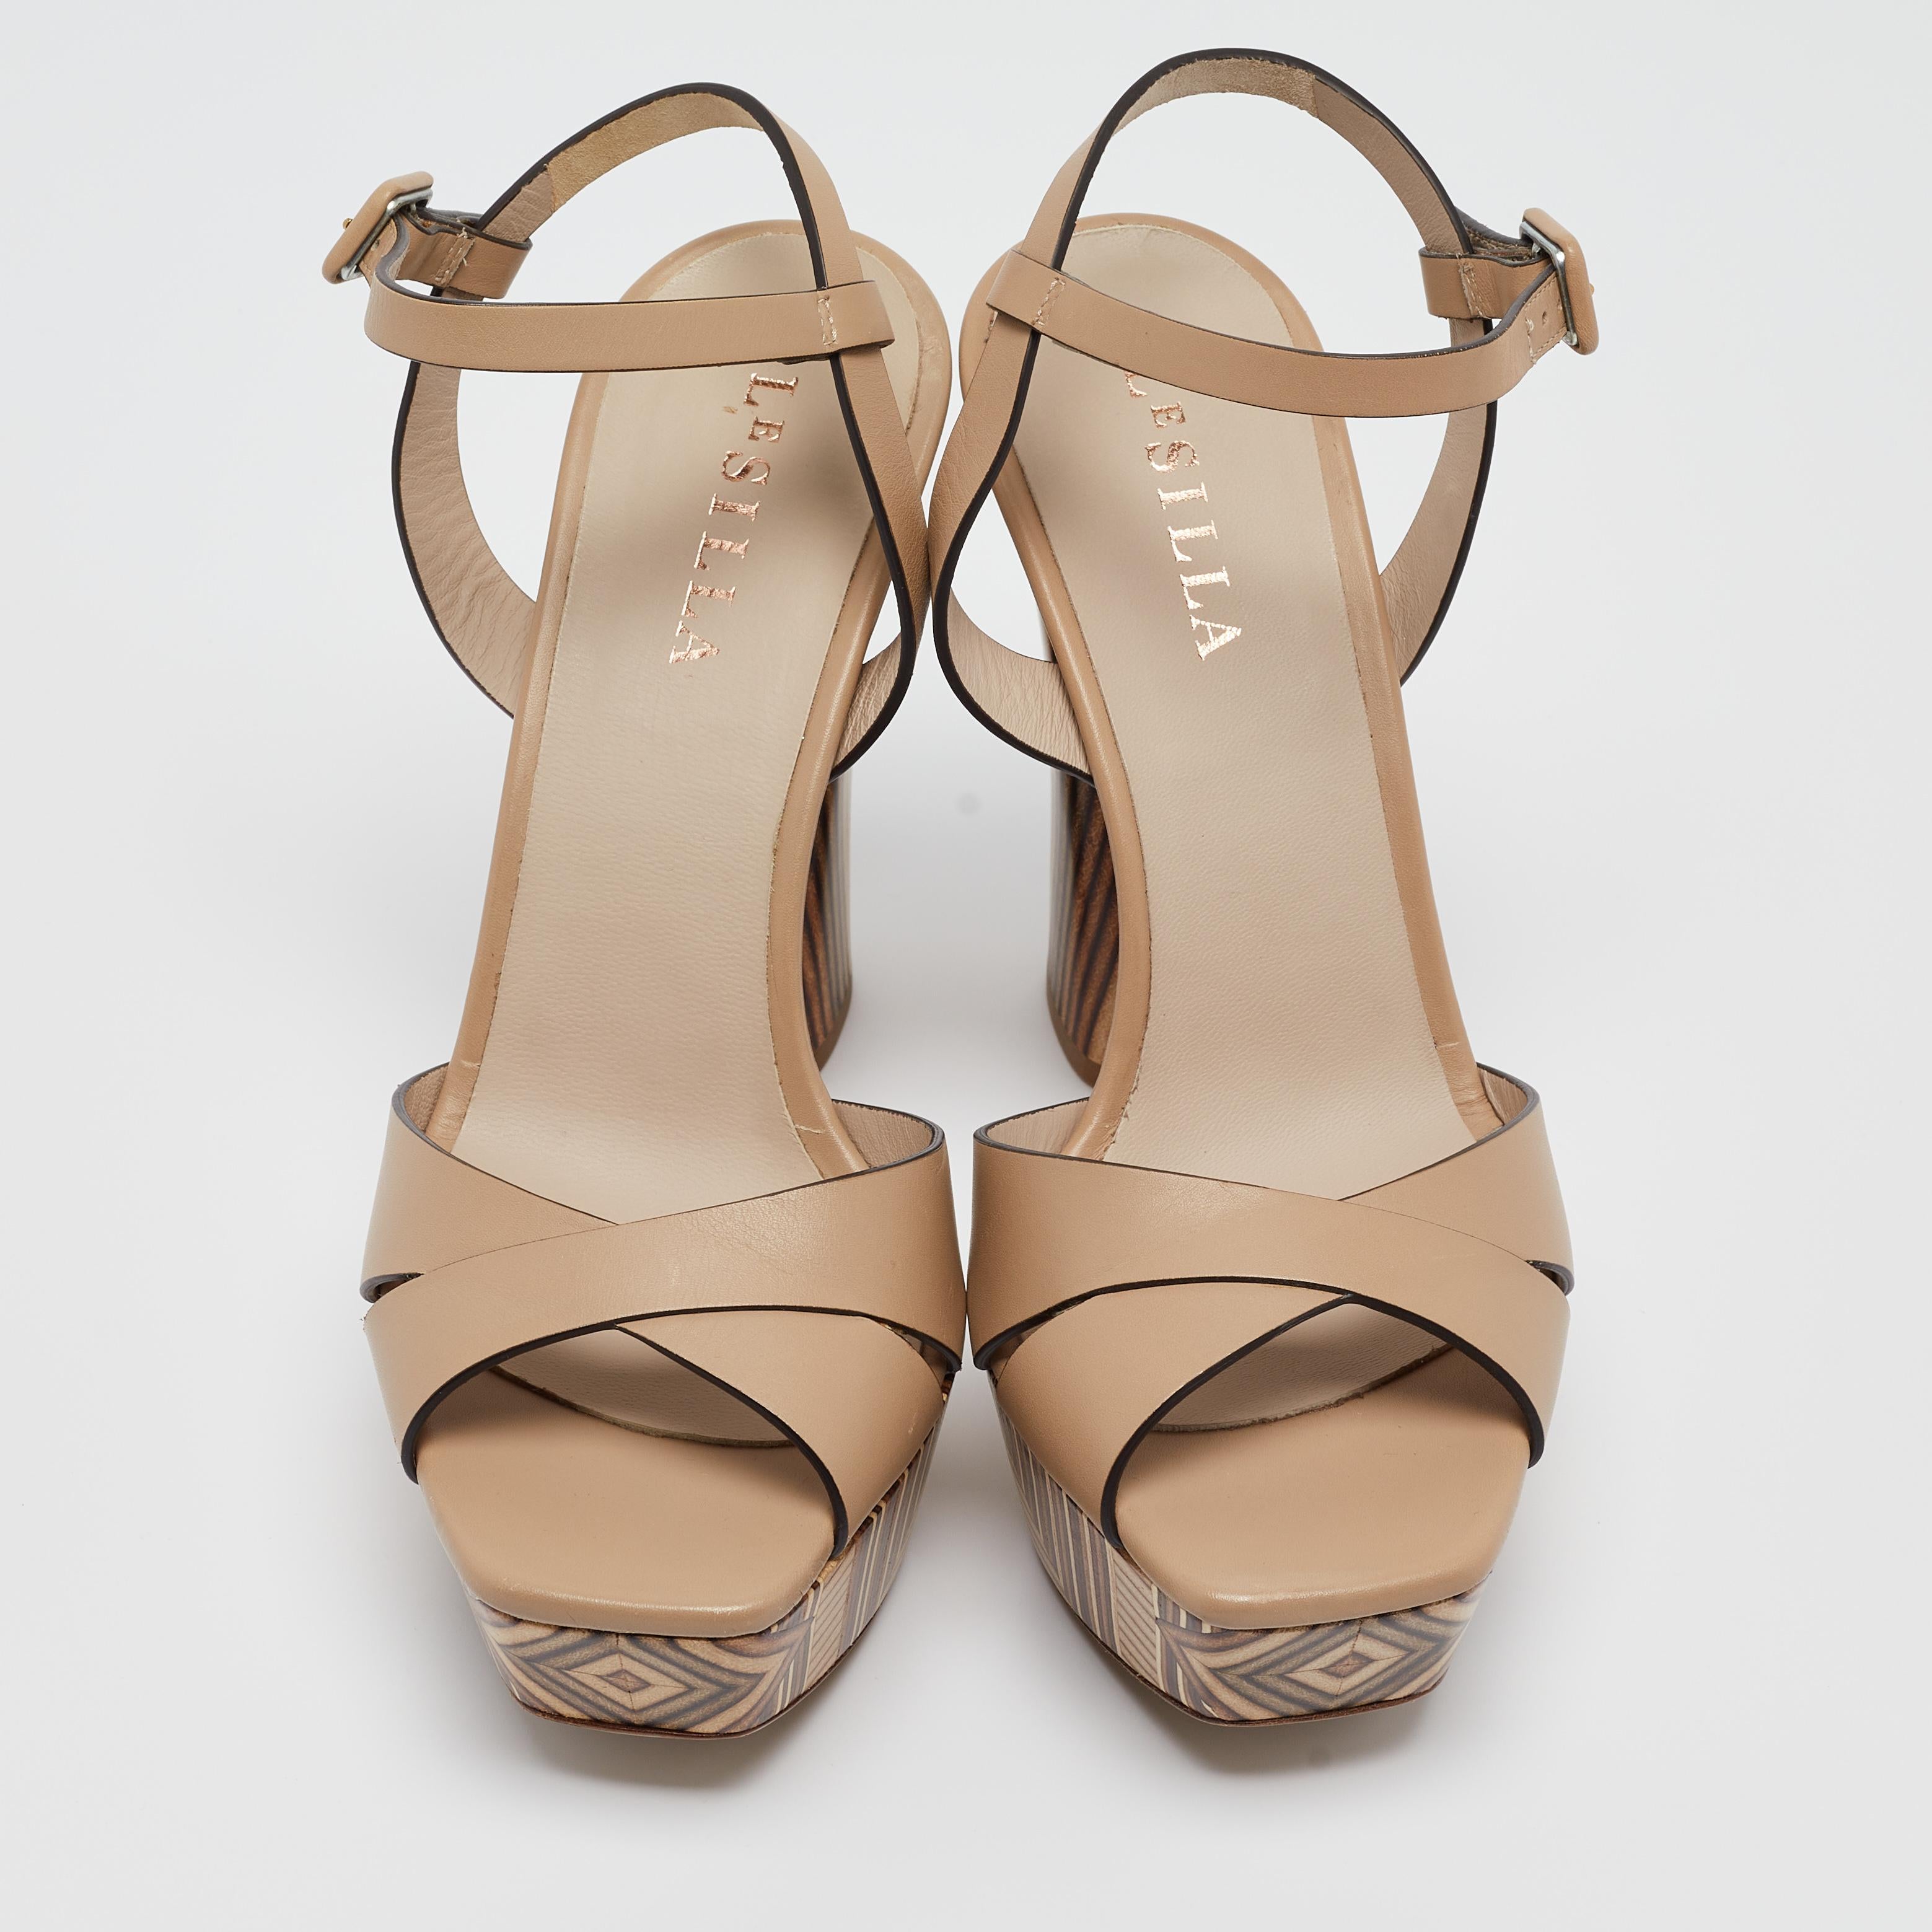 Le Silla Beige Leather Ankle Platform Ankle Strap Sandals Size 39 For Sale 2